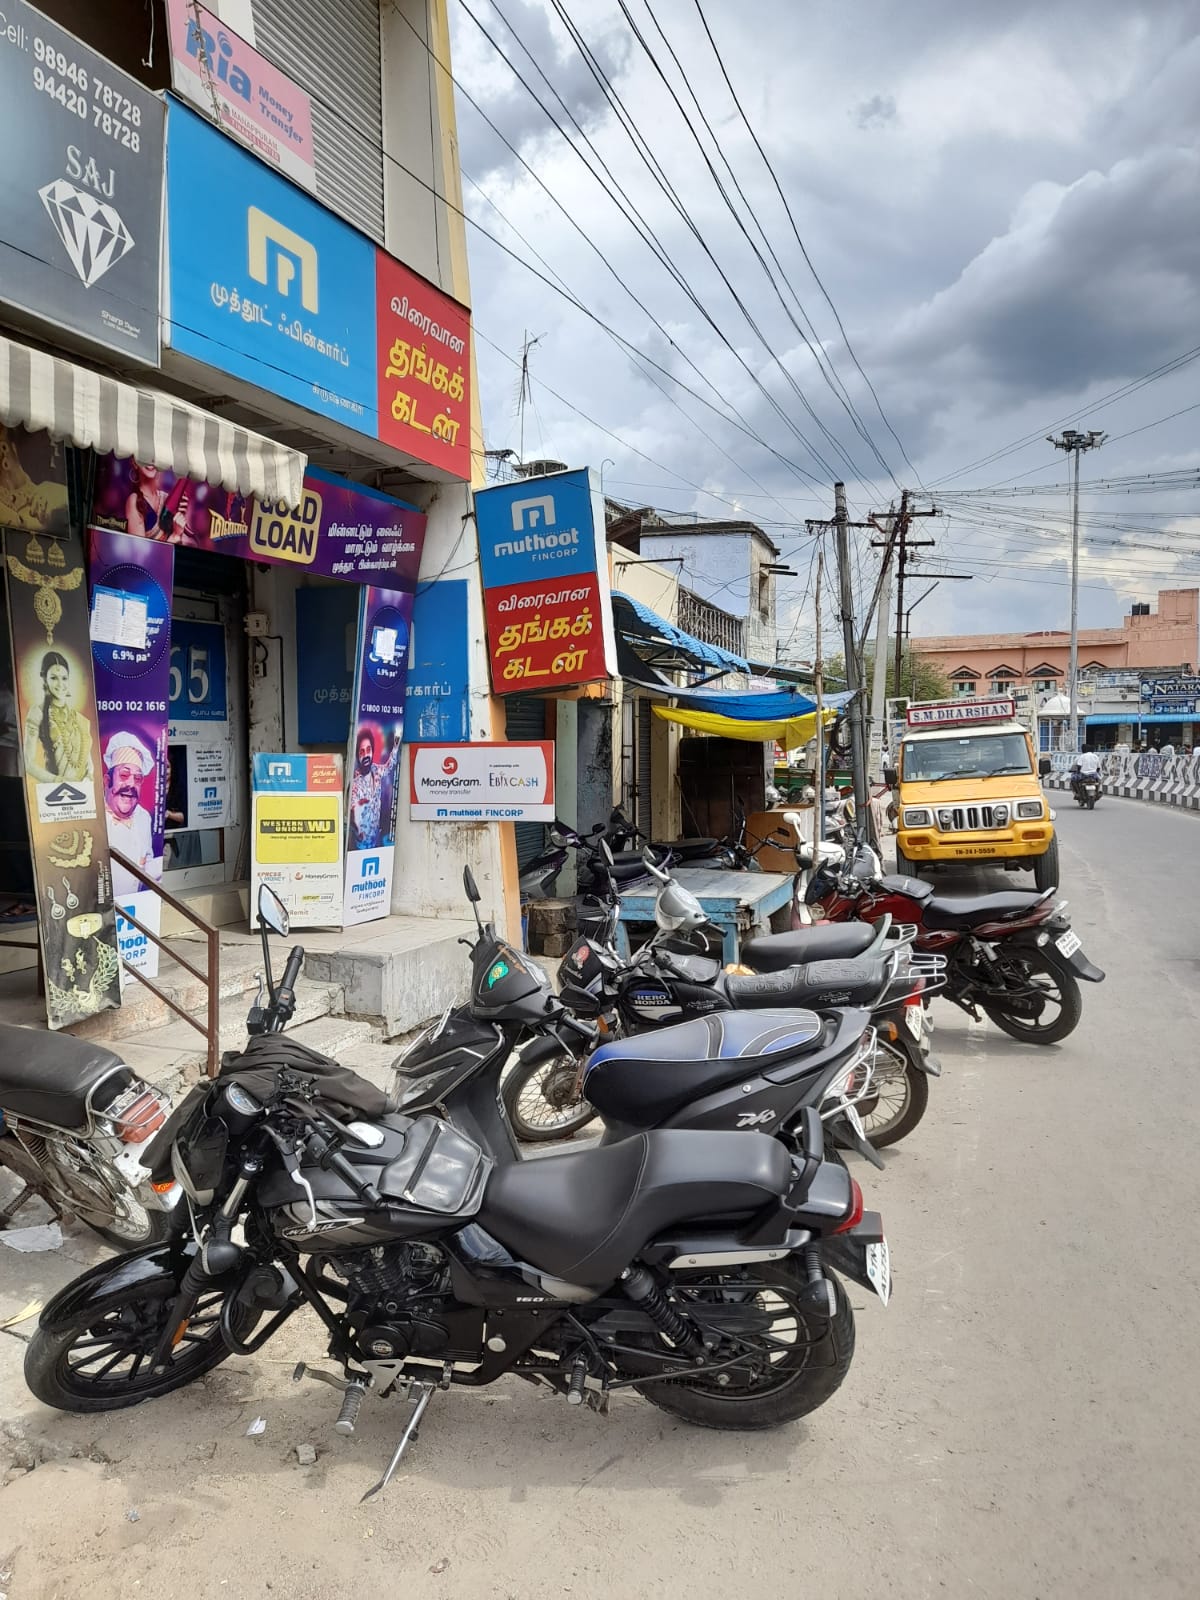 Muthoot Fincorp Gold Loan Services in Gandhi Road, Krishnagiri, Tamil Nadu